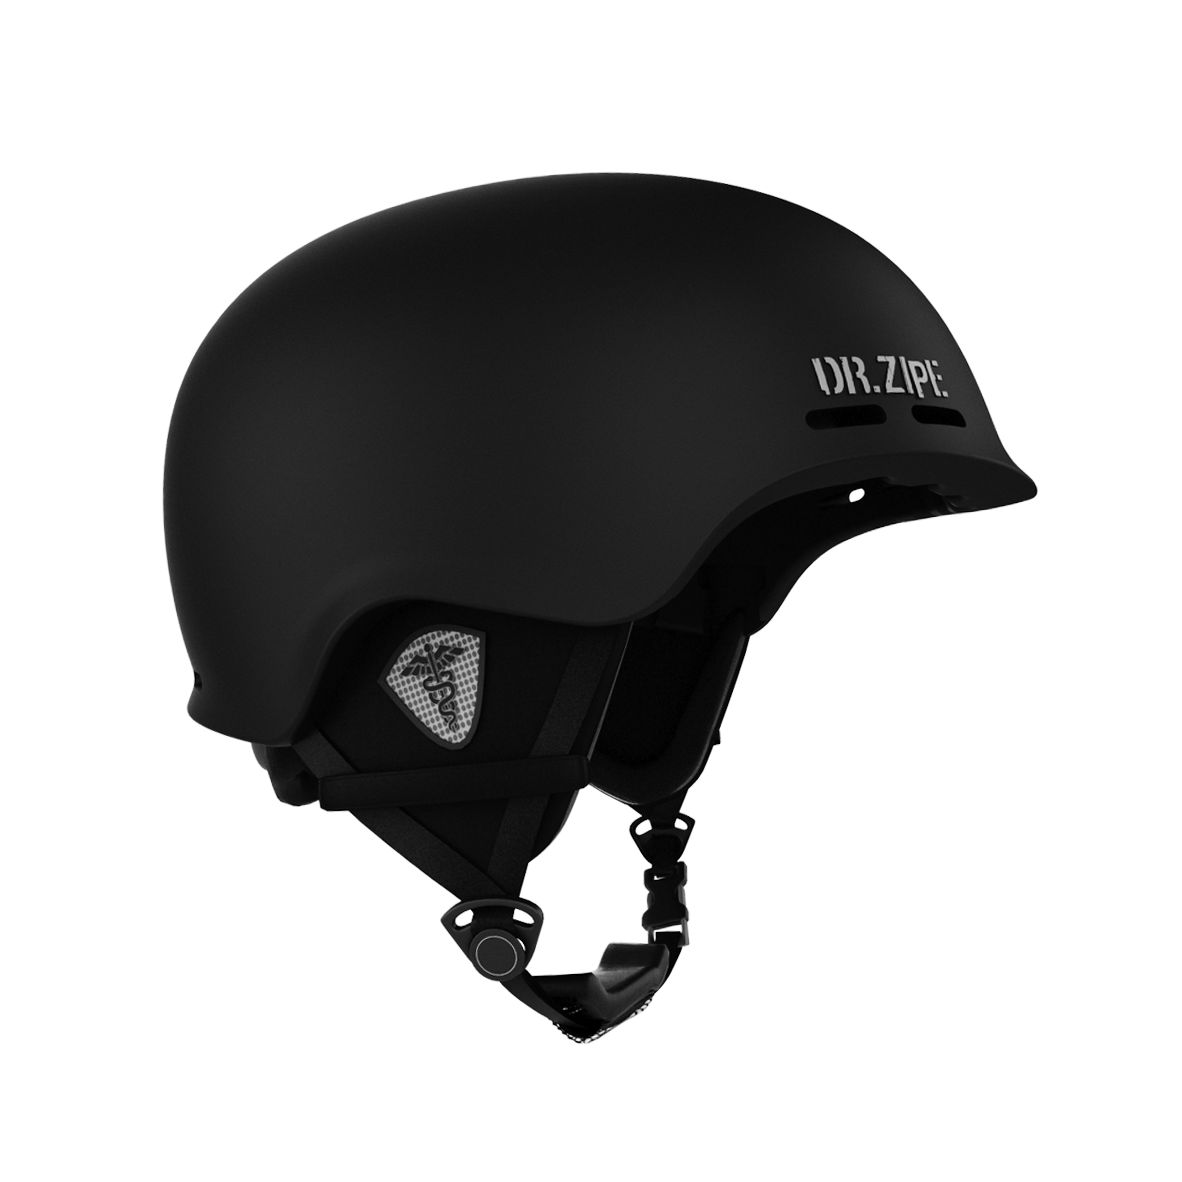  Cască Snowboard -  dr. zipe Armor Helmet Level IV